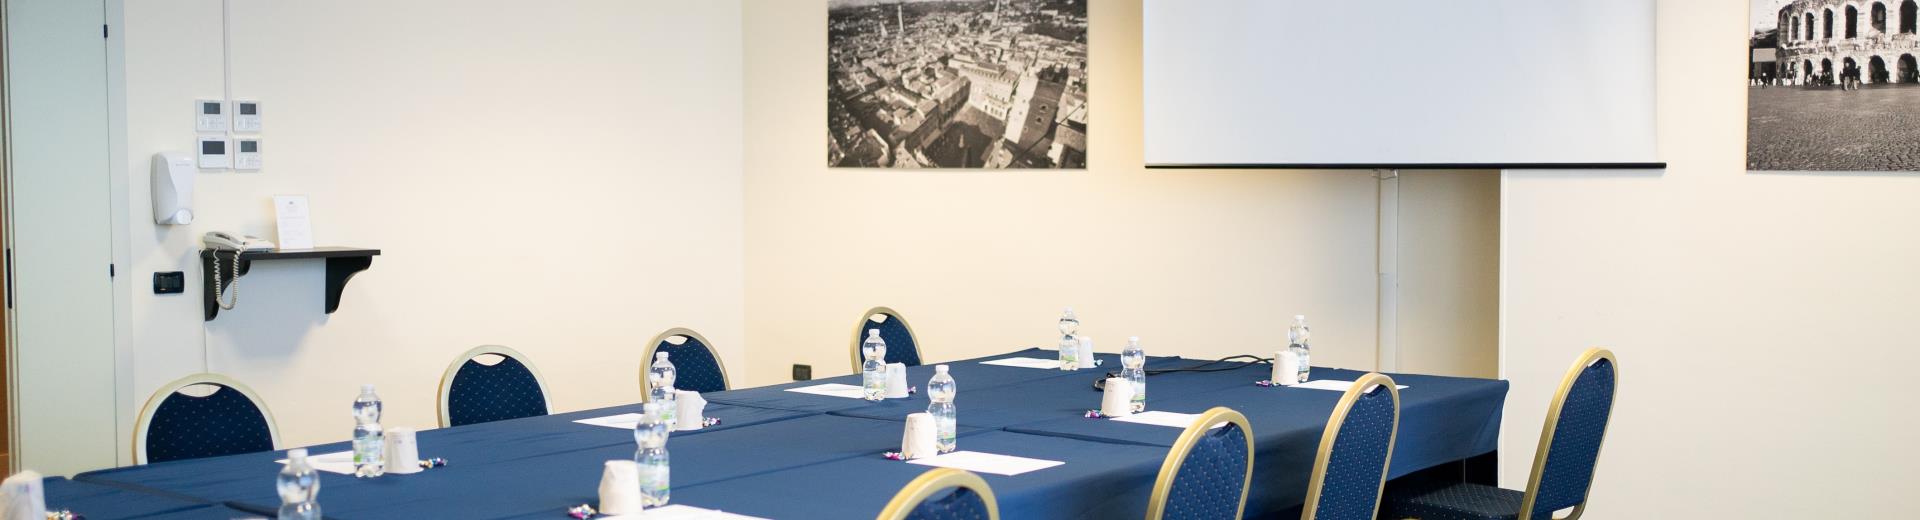 BW CTC Hotel Verona - Meeting room